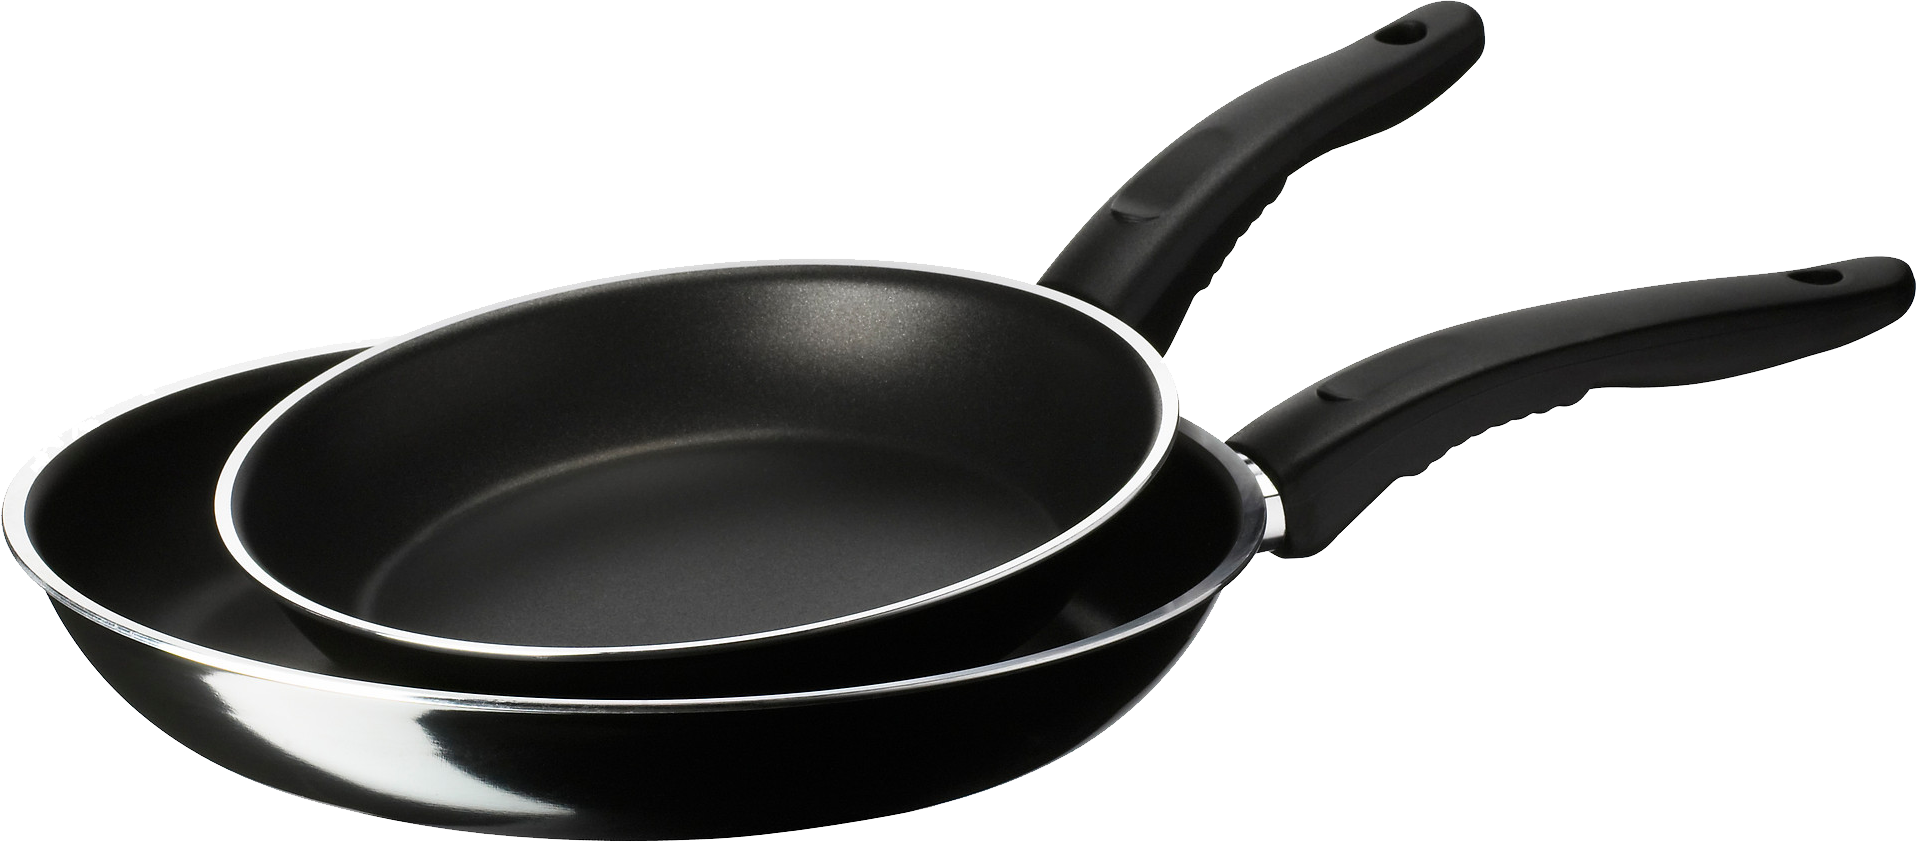 Frying Pan PNG - 8863